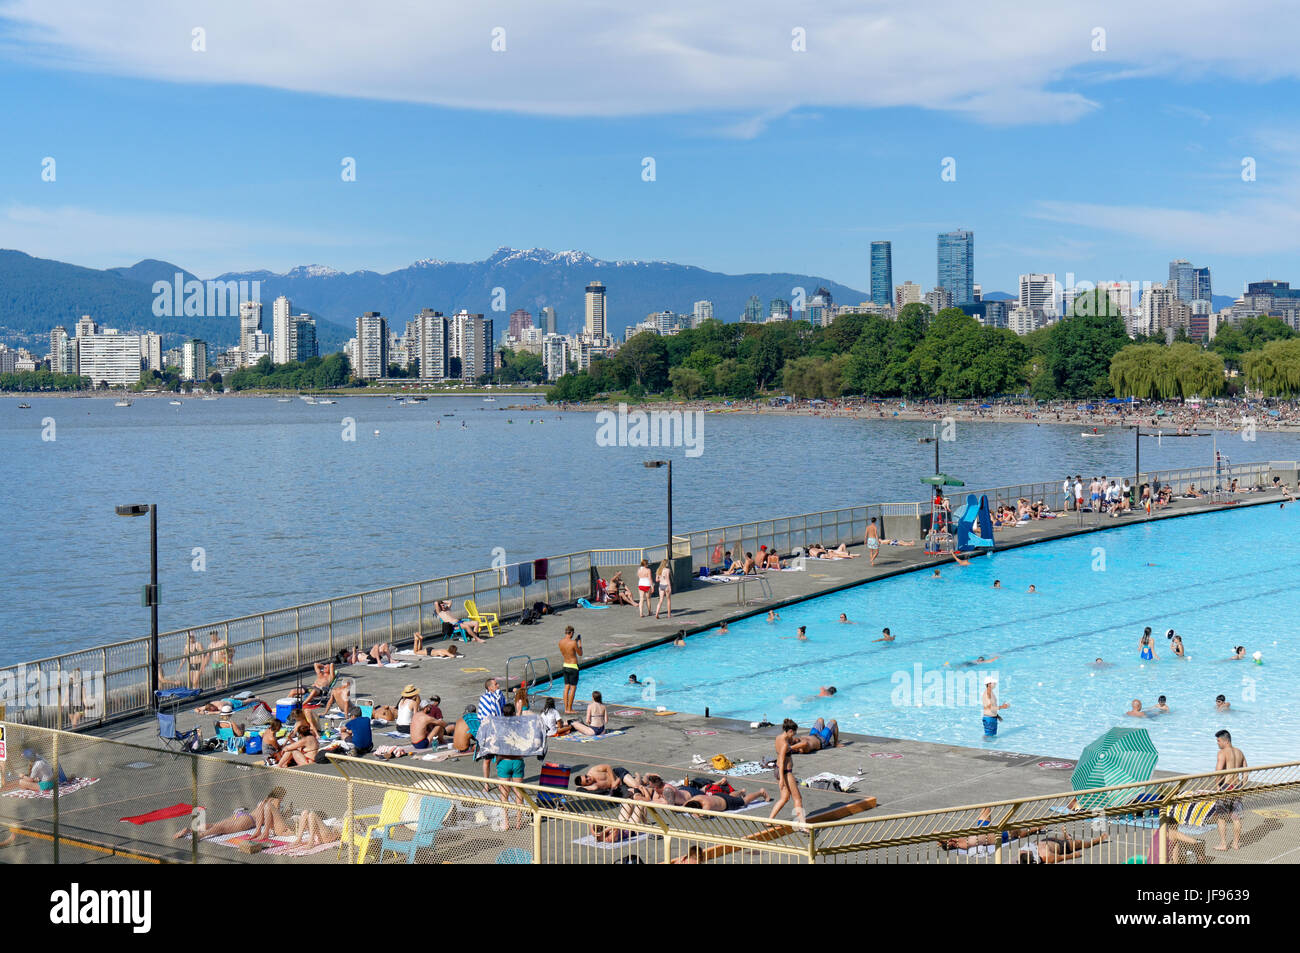 People sunbathing and swimming at Kitsilano Pool on English Bay, Vancouver, British Columbia, Canada Stock Photo